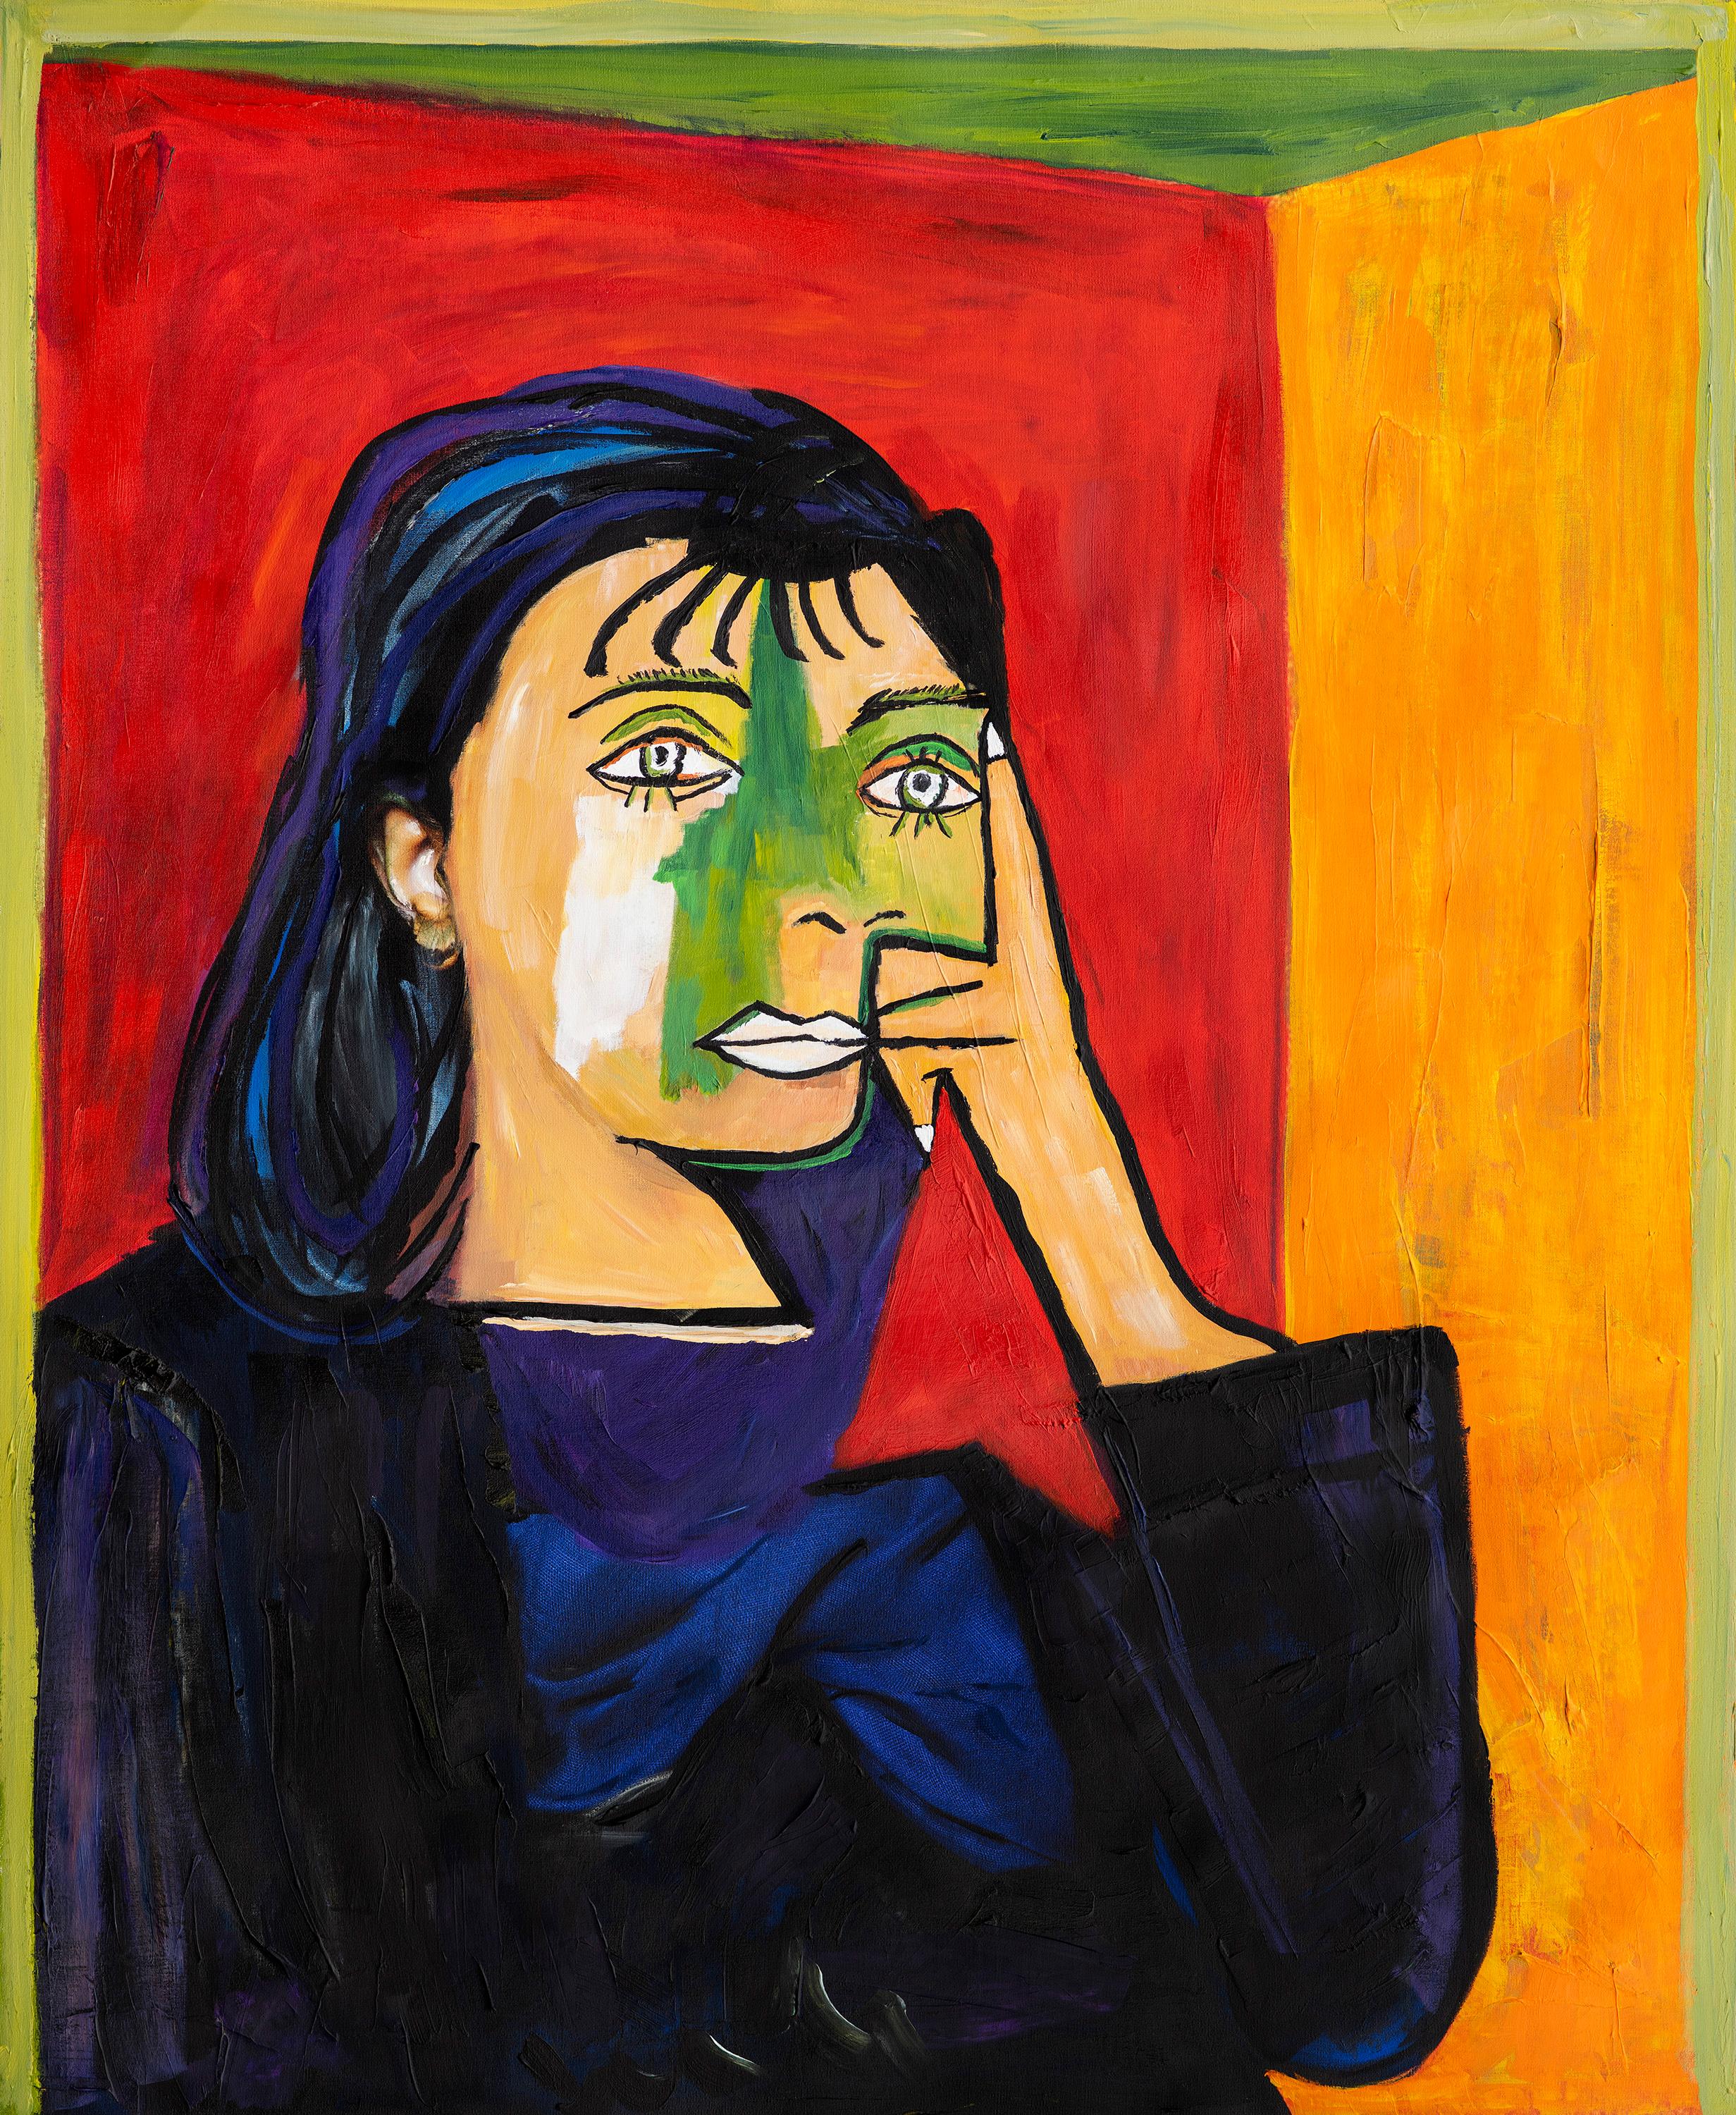 E2 - Kleinveld & Julien Figurative Photograph - Ode to Picasso's 'Portrait of Dora Maar'